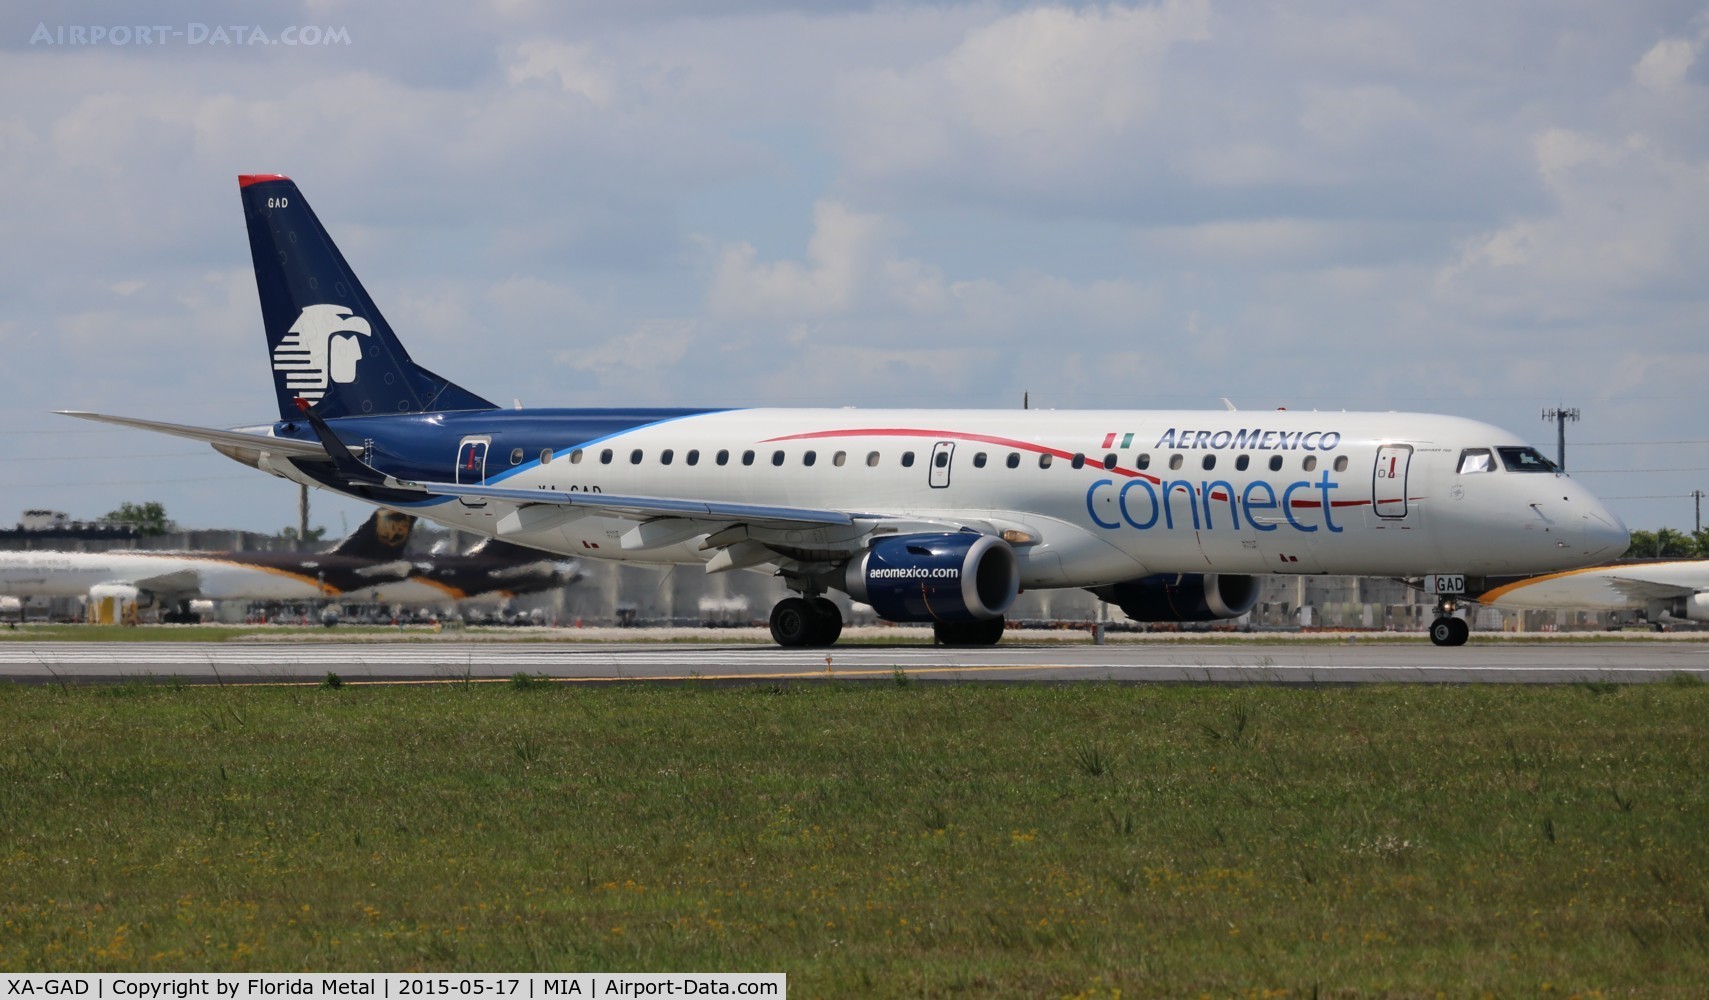 XA-GAD, 2013 Embraer 190LR (ERJ-190-100LR) C/N 19000651, Aeromexico Connect